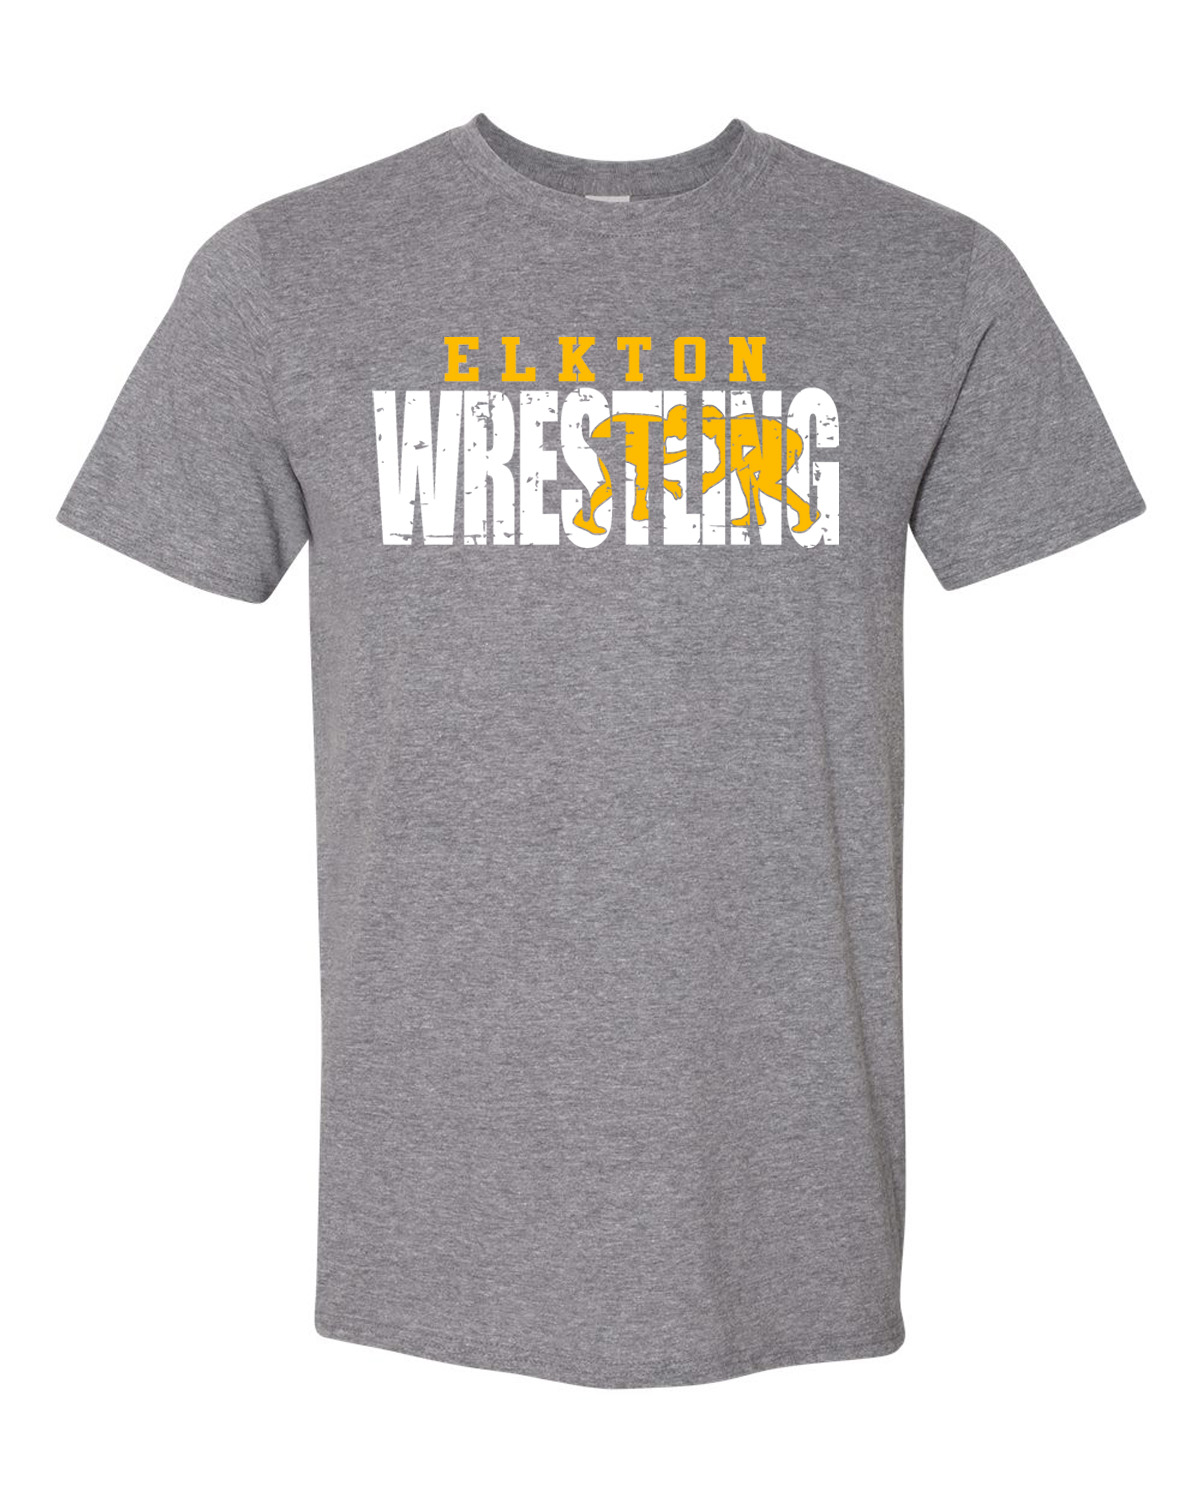 Adult size - T-Shirt (Grey) - $18